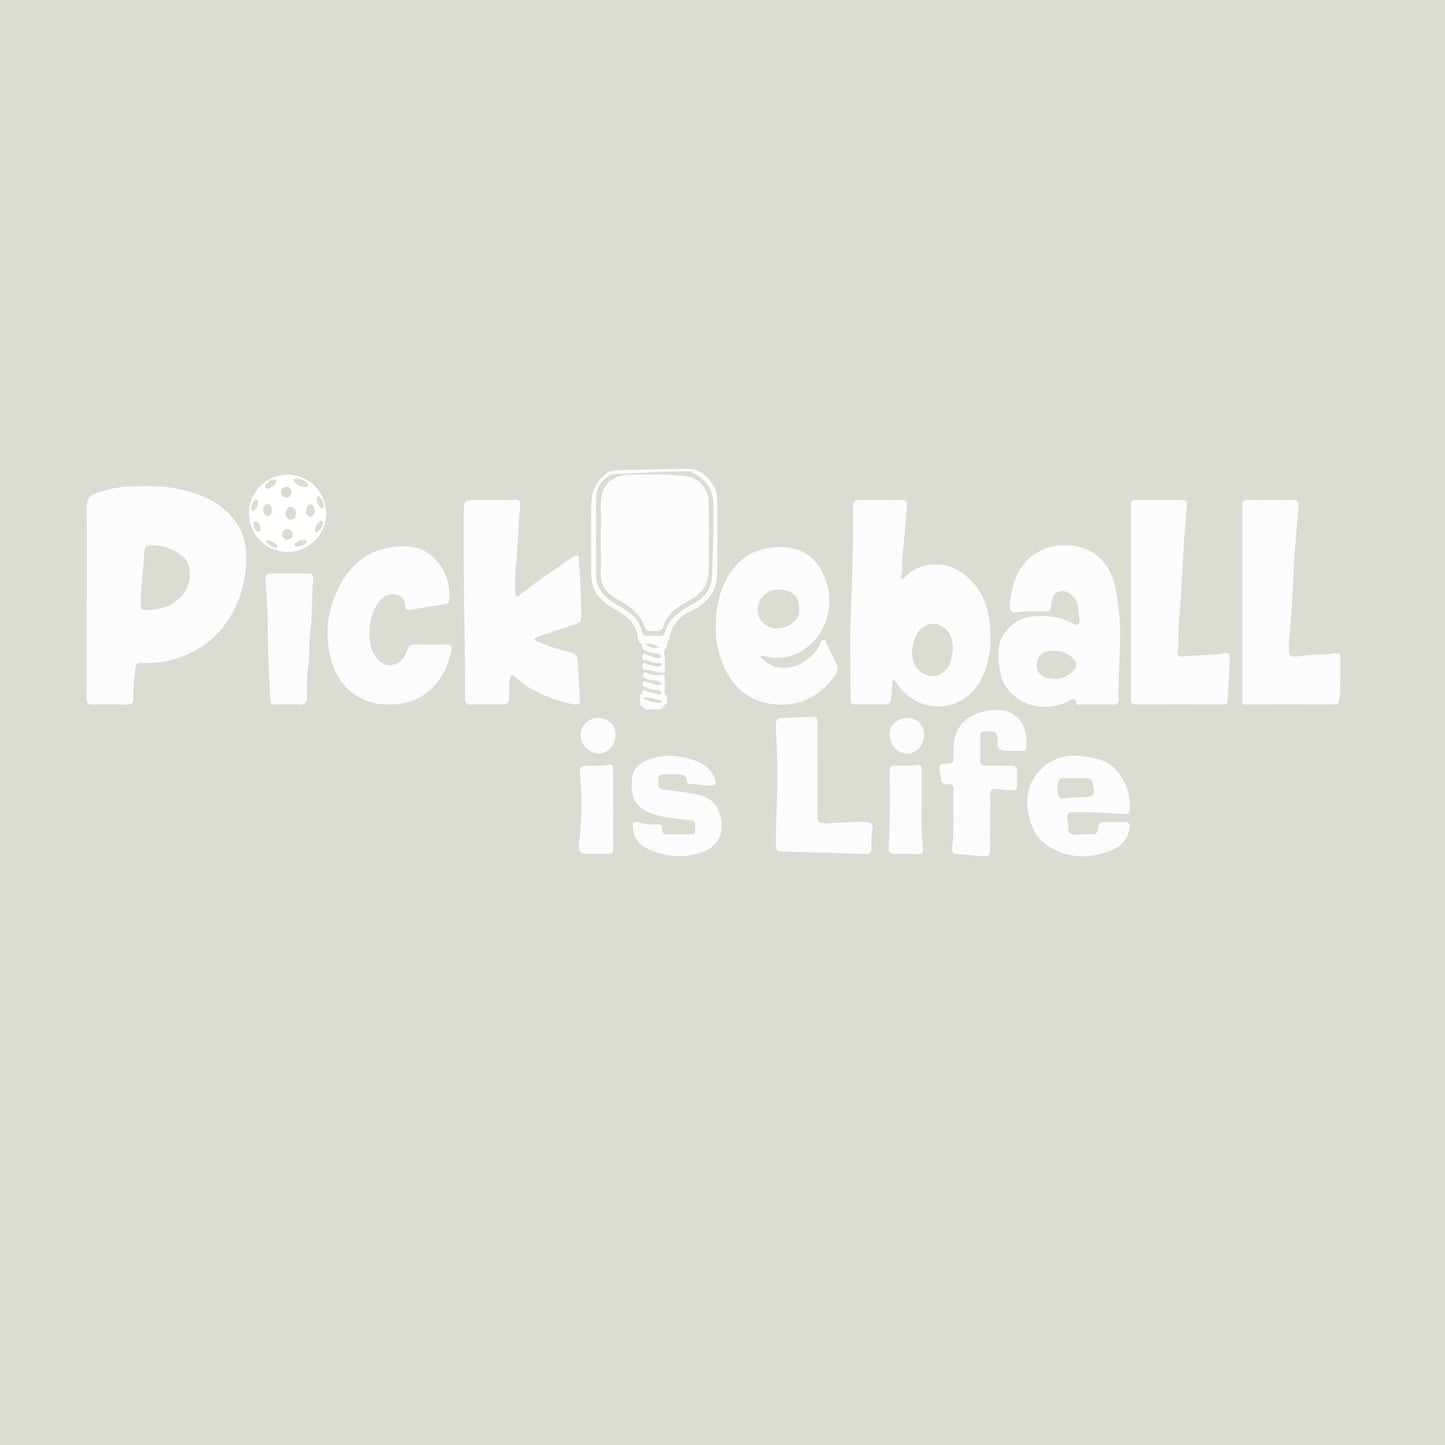 Pickleball Is Life | Women's Open Teardrop Back Pickleball Tank | 100% Polyester